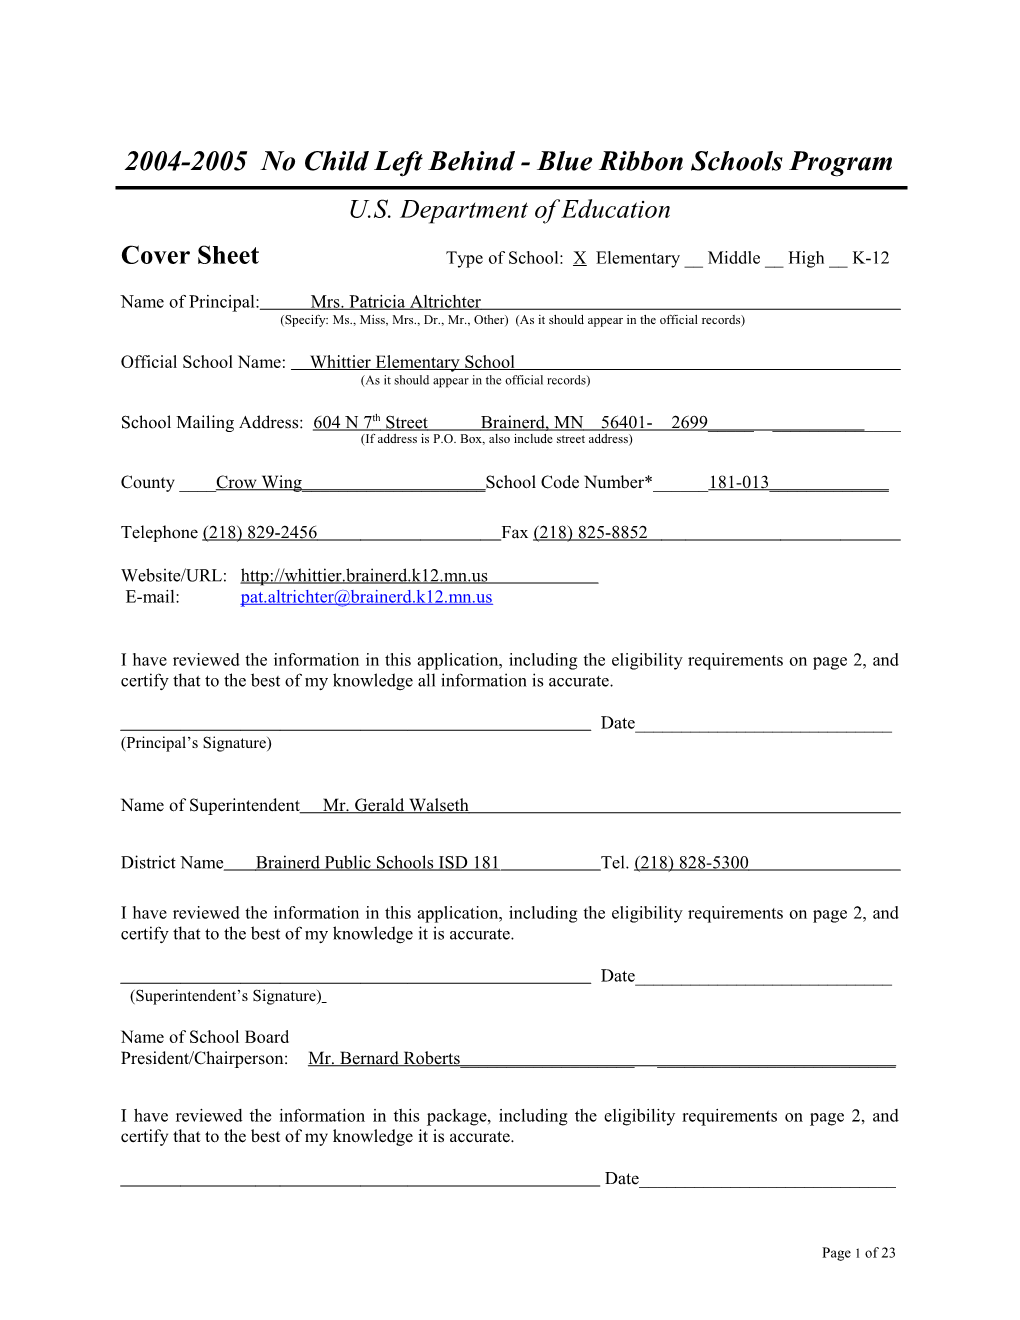 Whittier Elementary School Application: 2004-2005, No Child Left Behind - Blue Ribbon Schools